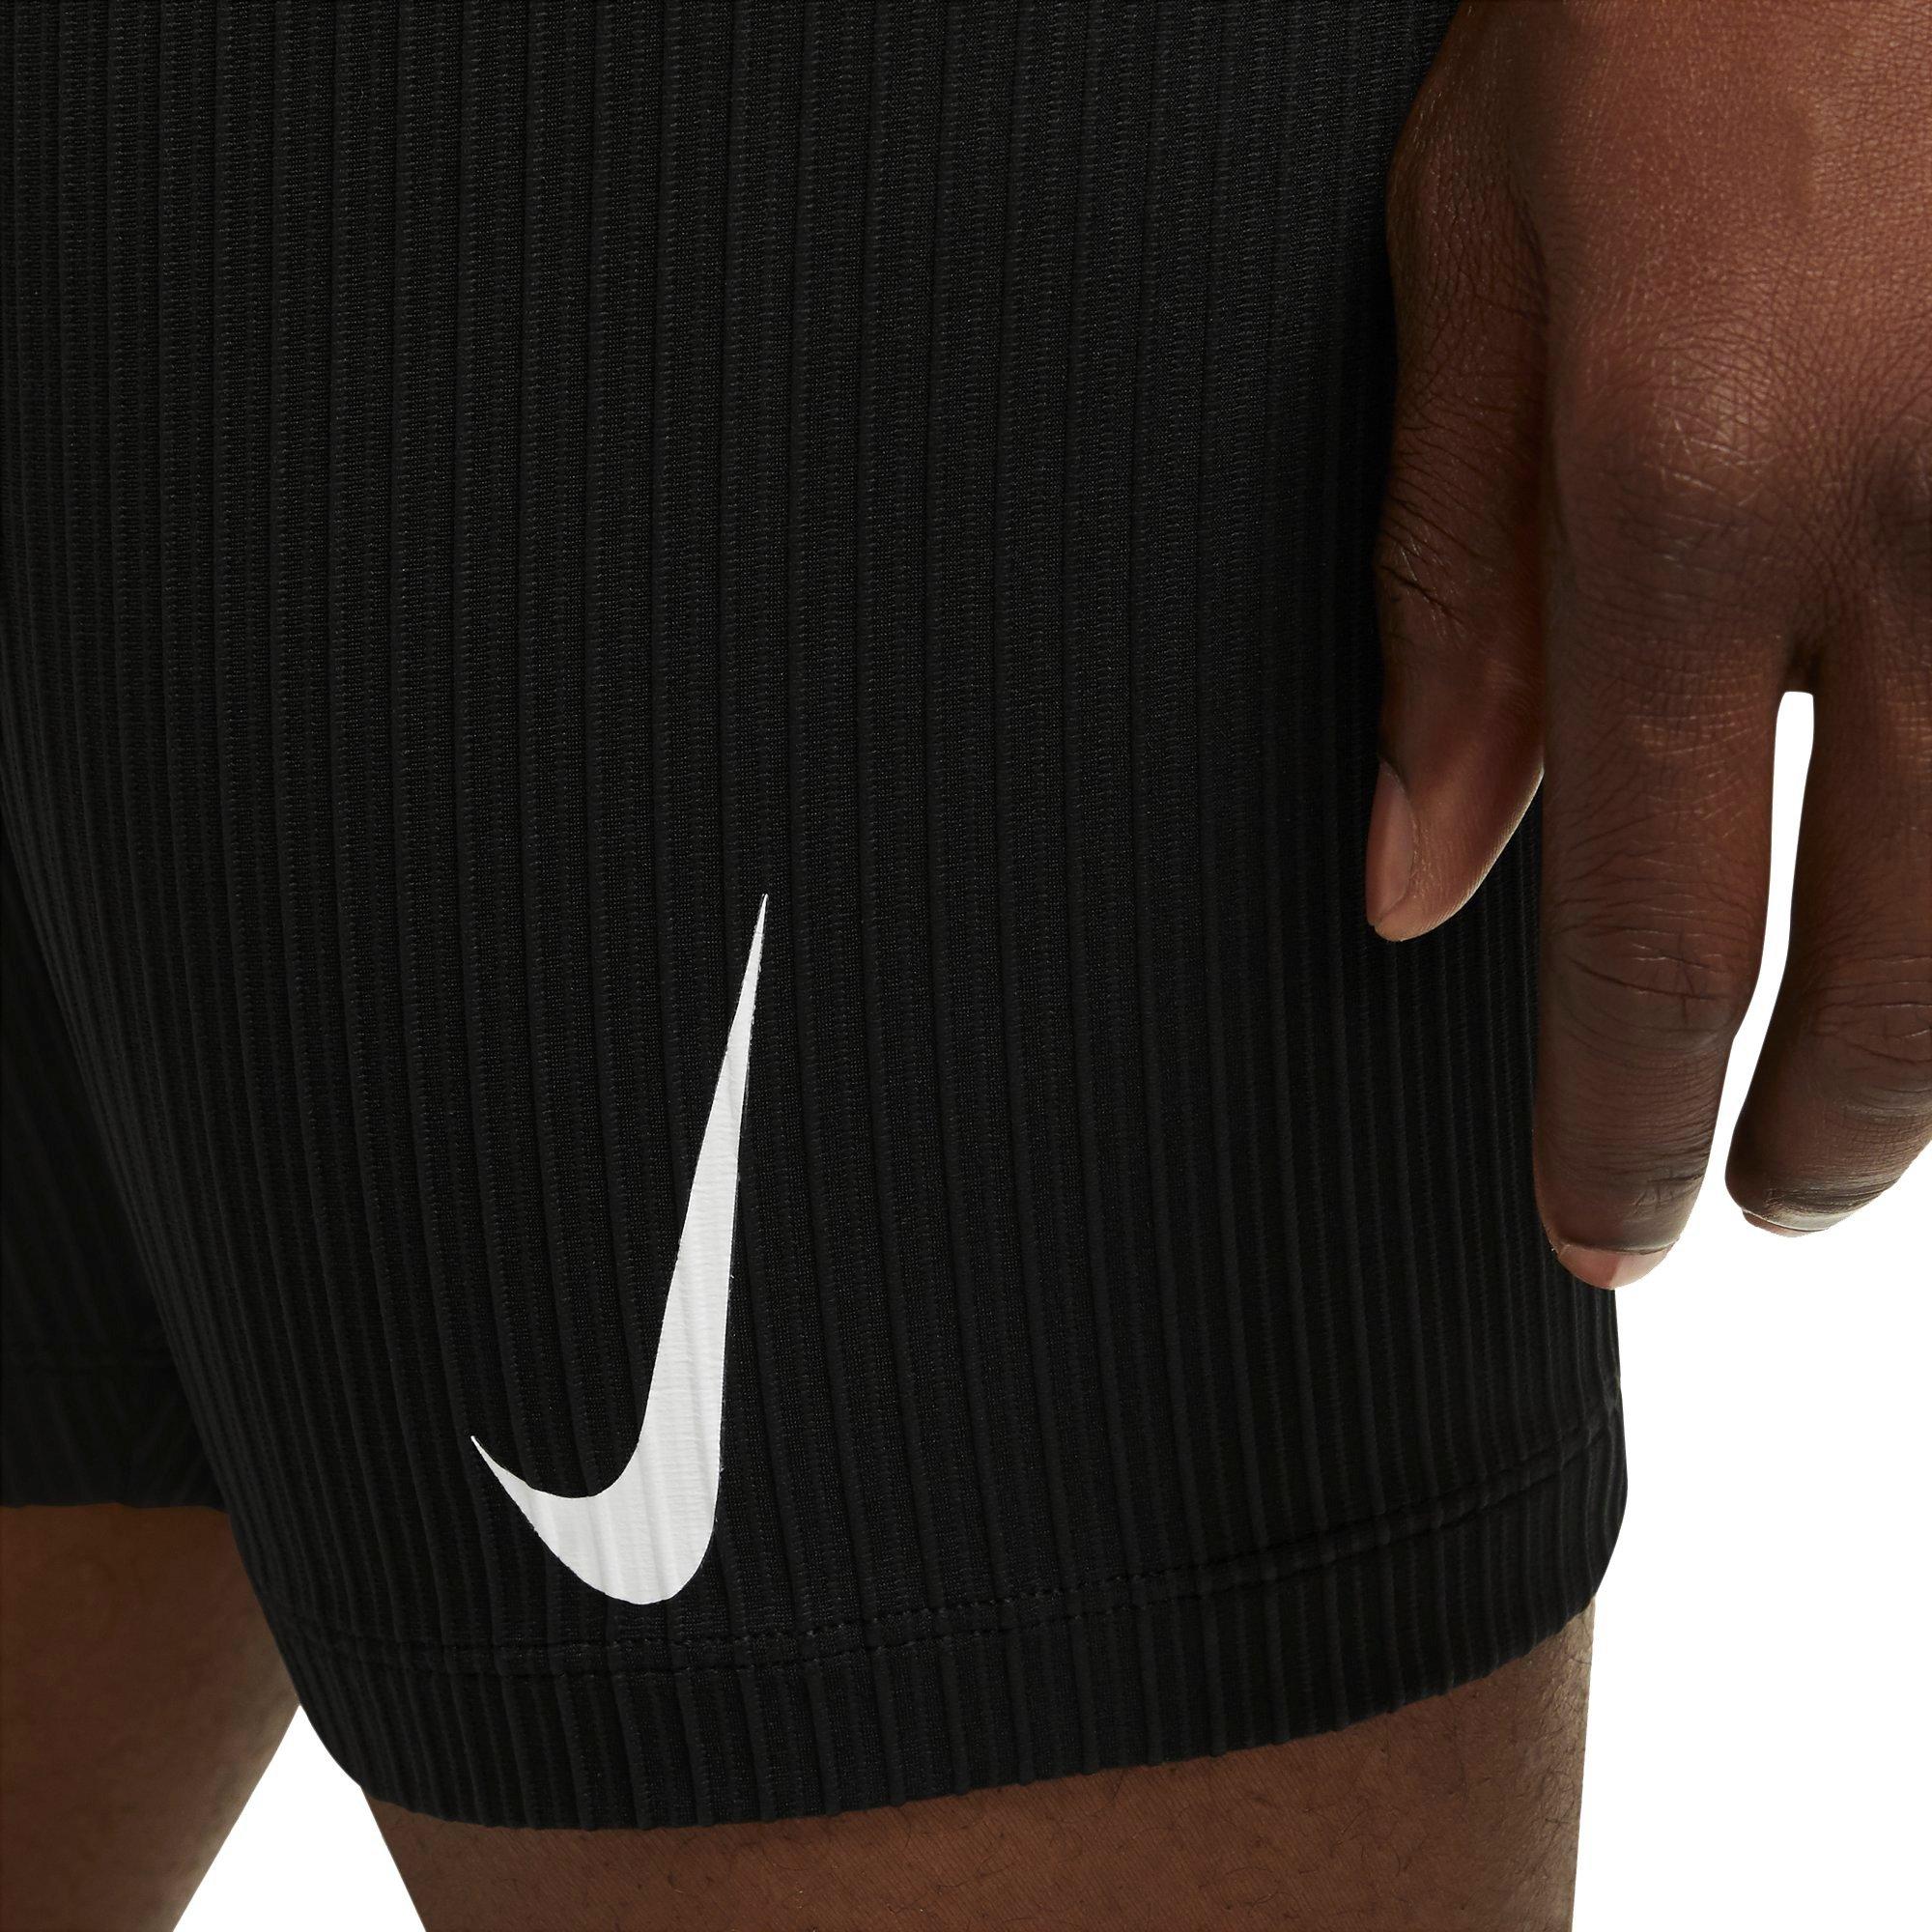 Nike Aeroswift Half Tights Size M, Men's Fashion, Activewear on